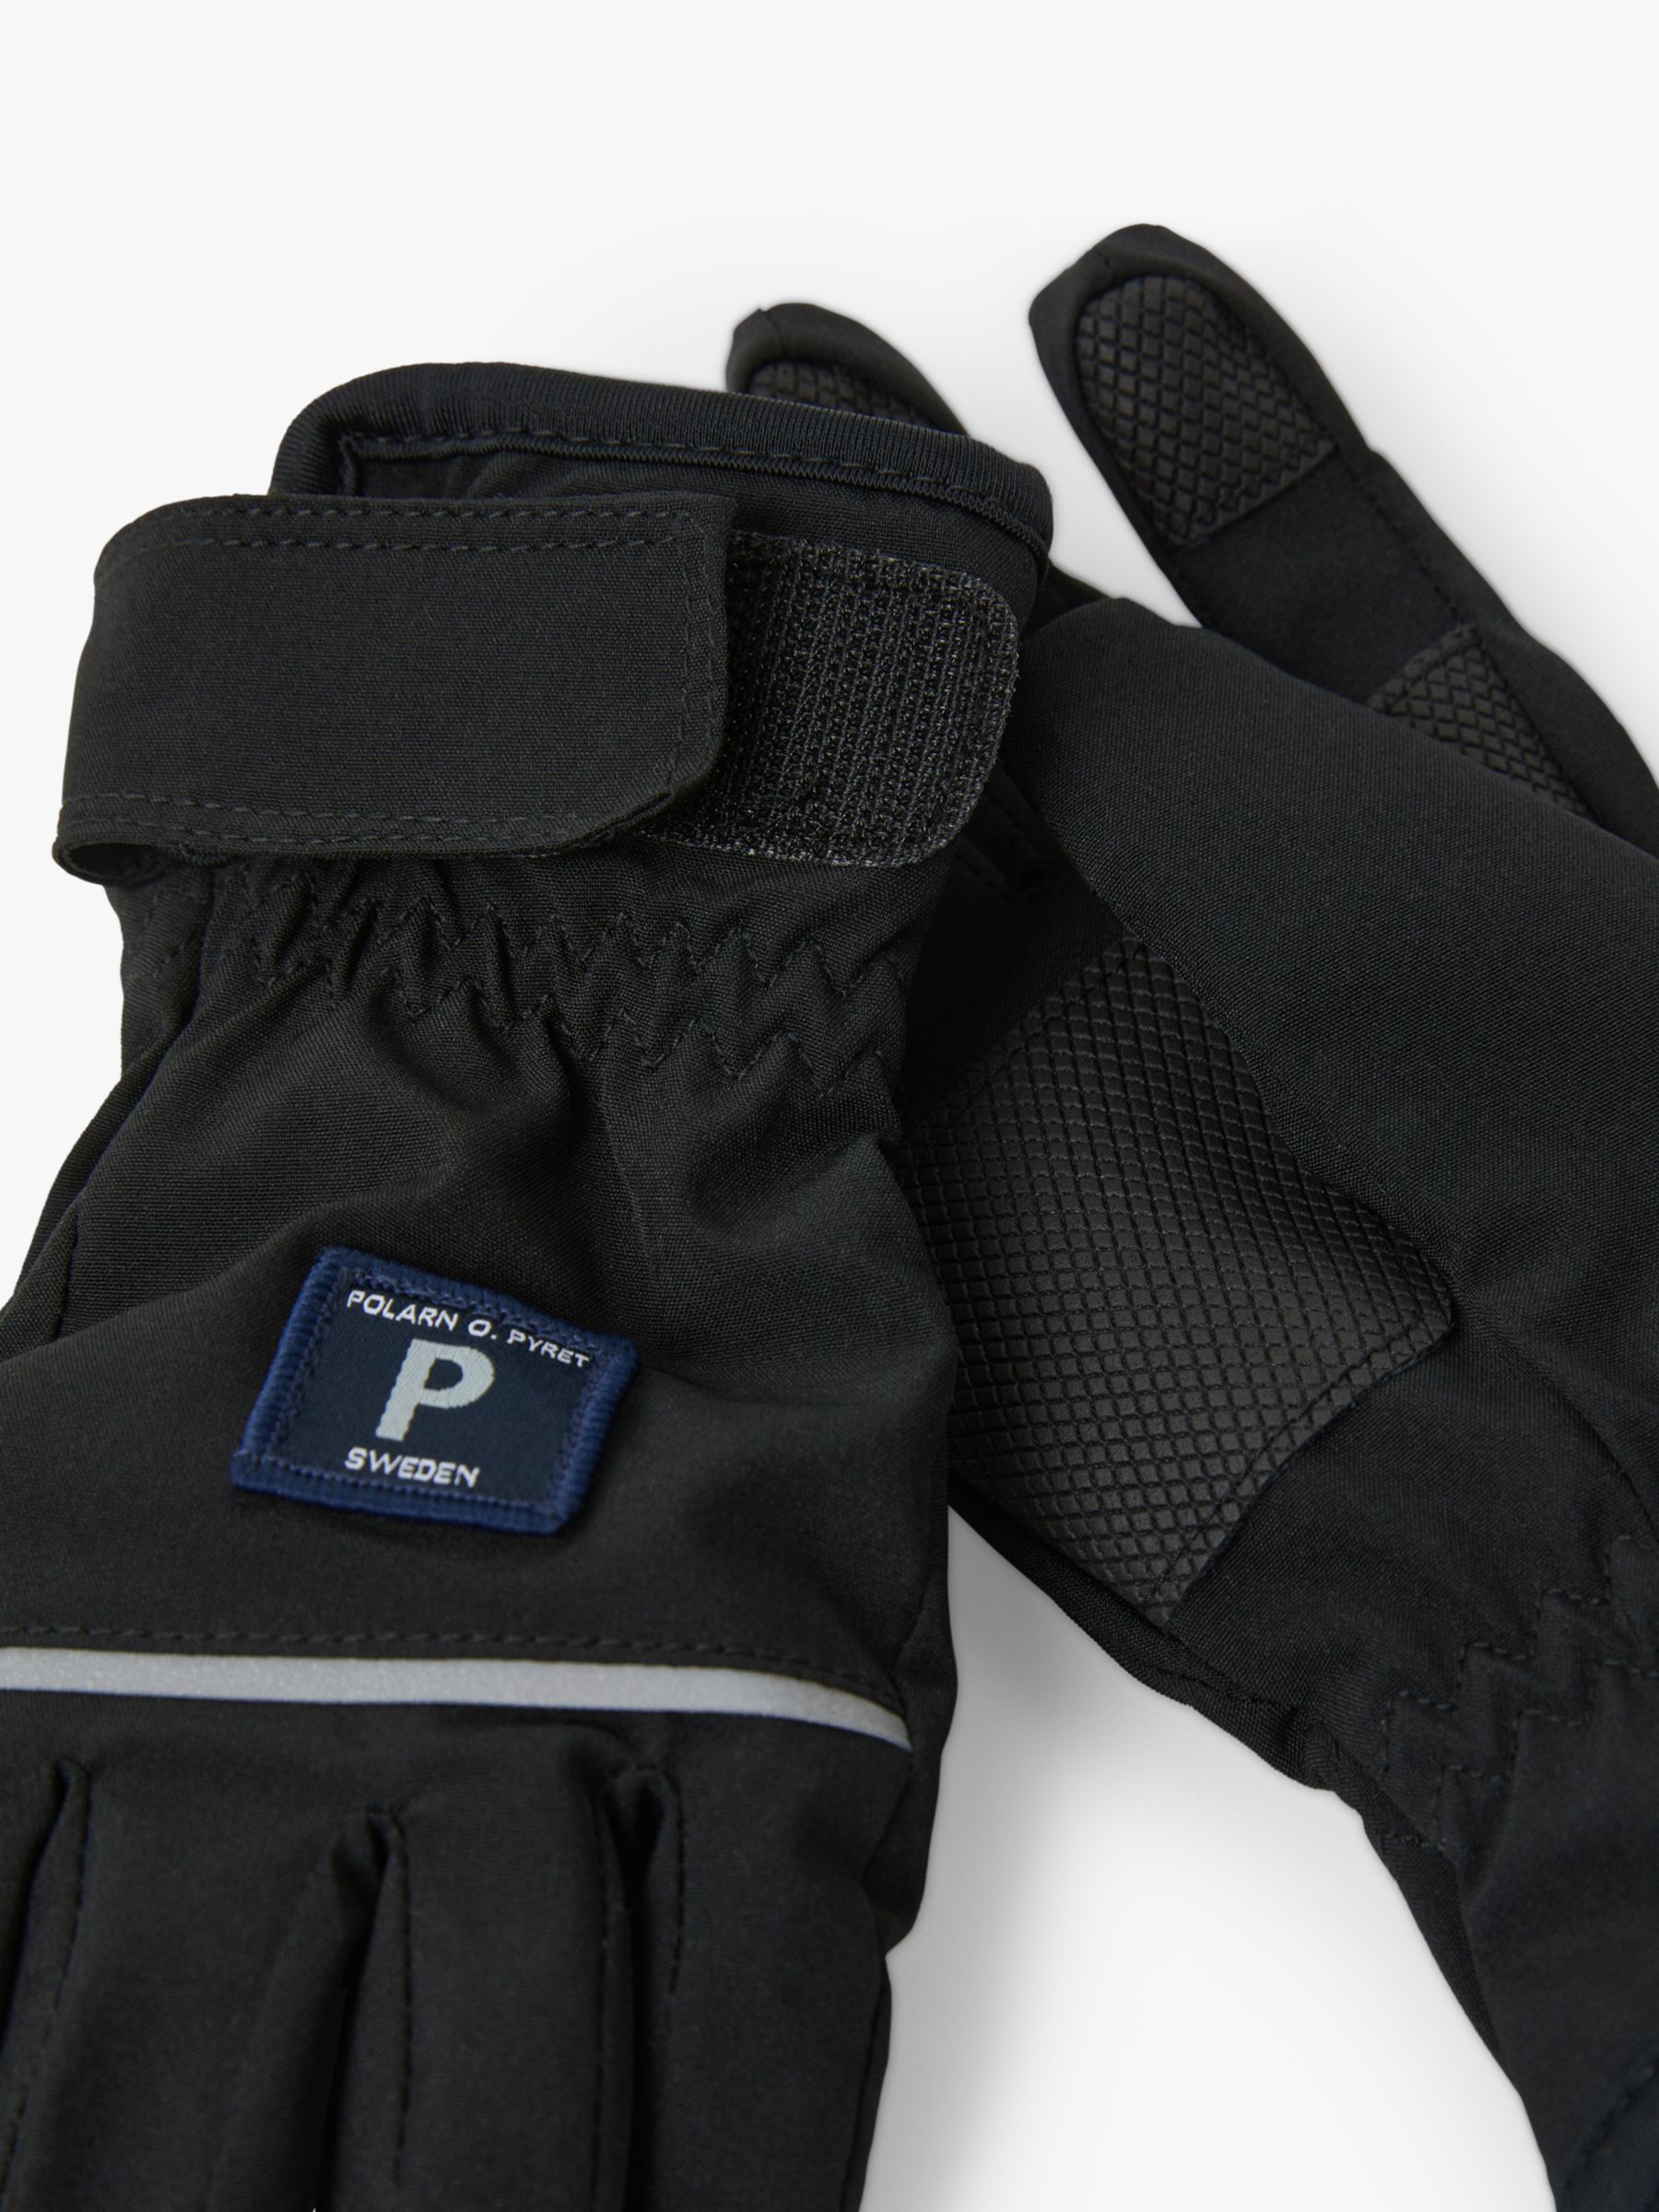 Buy Polarn O. Pyret Kids' Soft Shell Gloves, Black Online at johnlewis.com